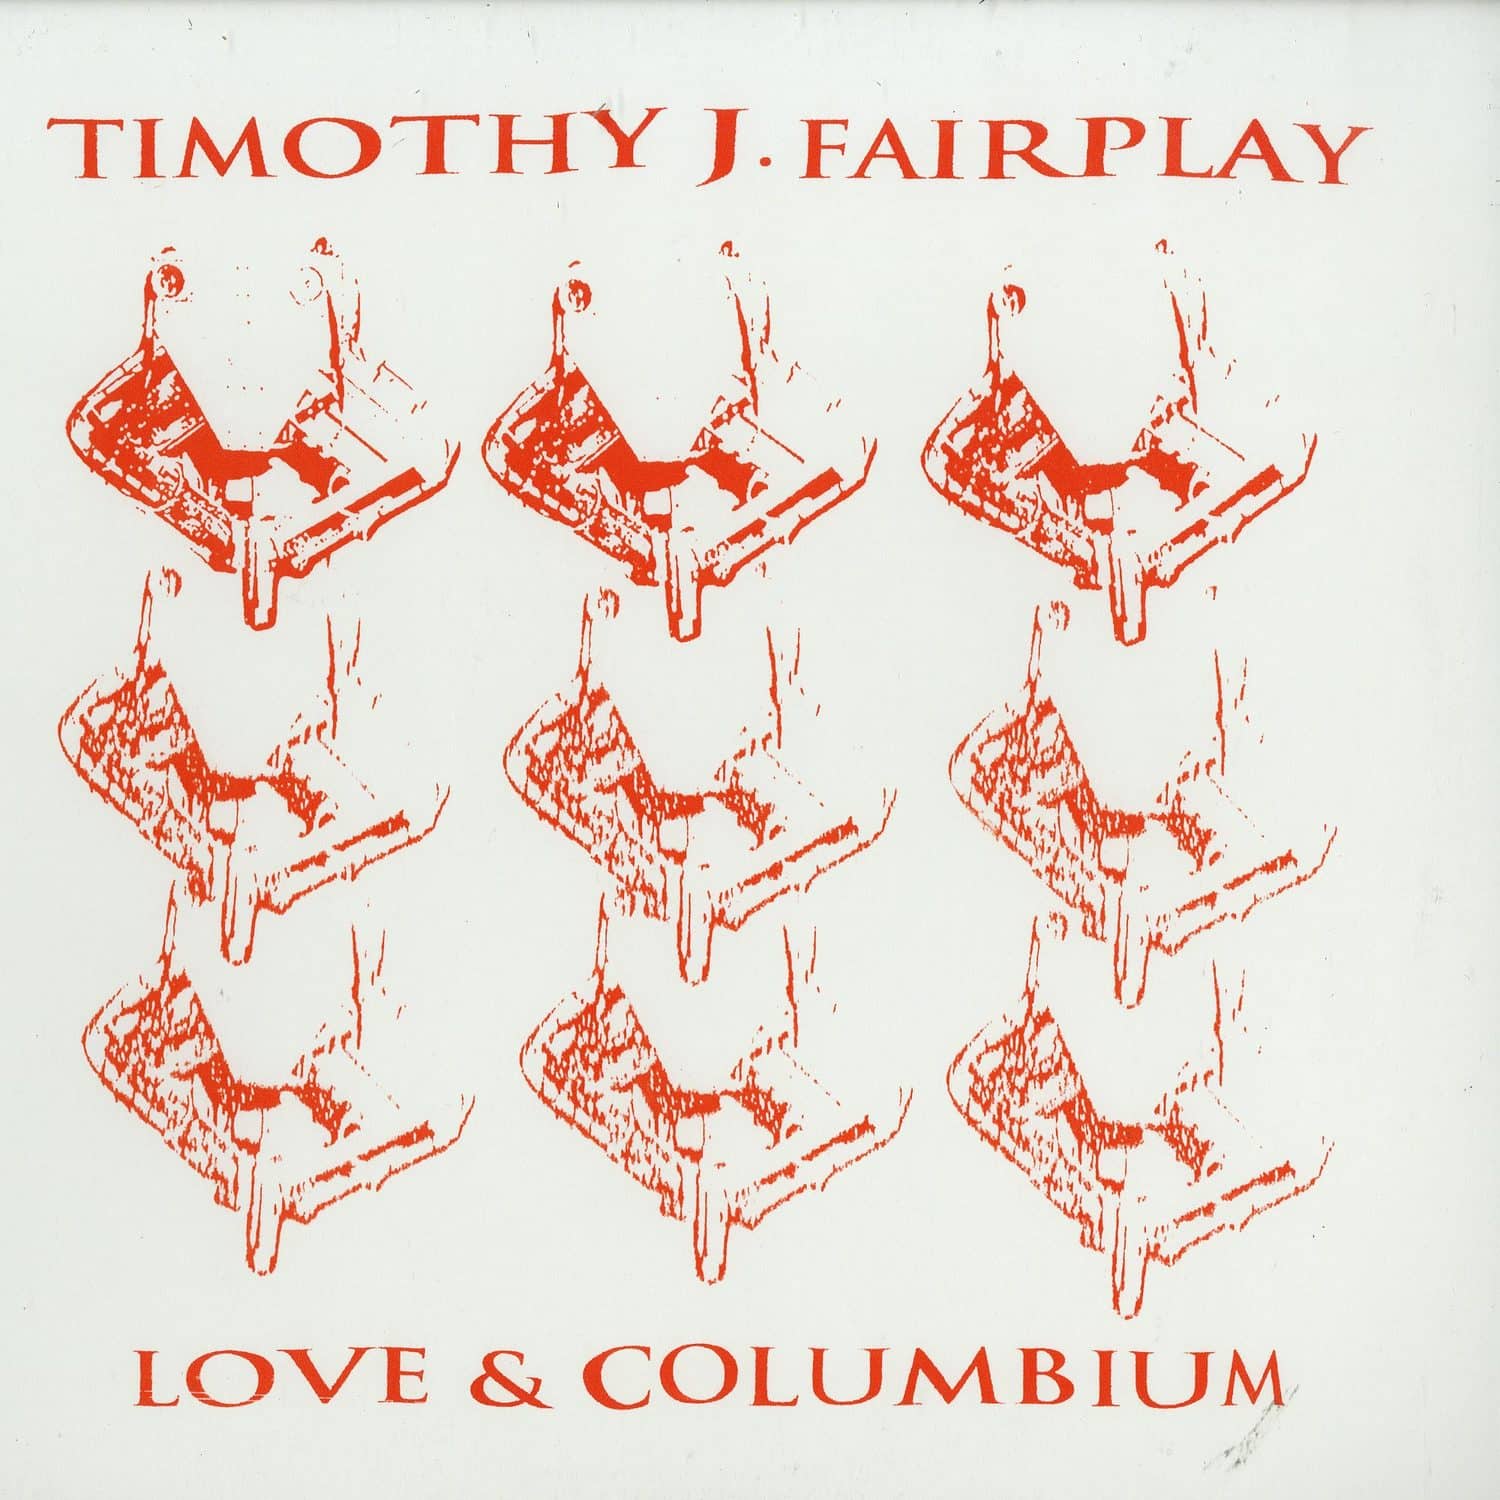 Timothy J. Fairplay - LOVE & COLUMBIUM